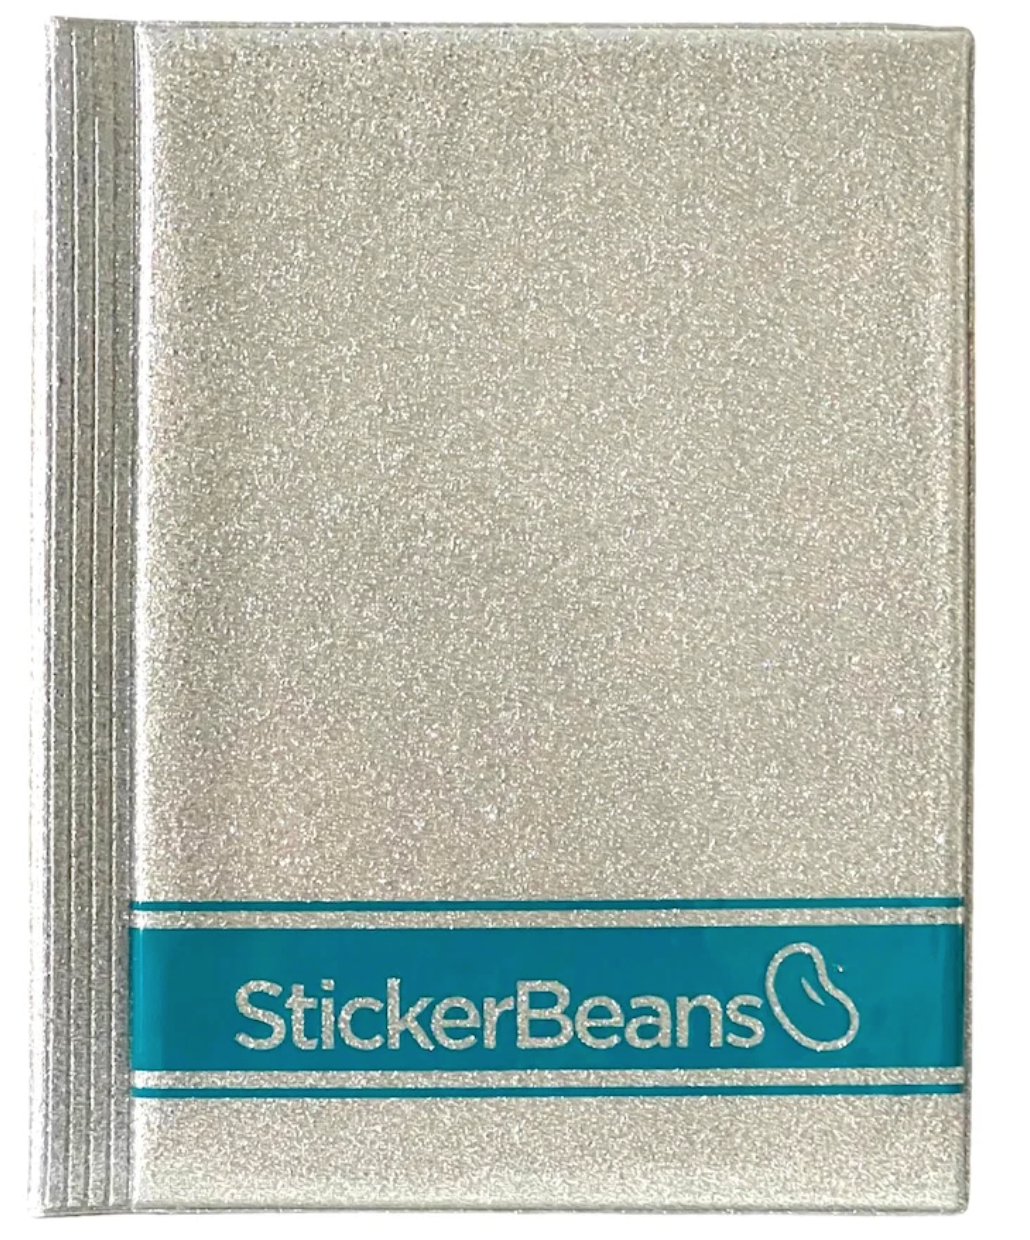 StickerBeans Collectors Book